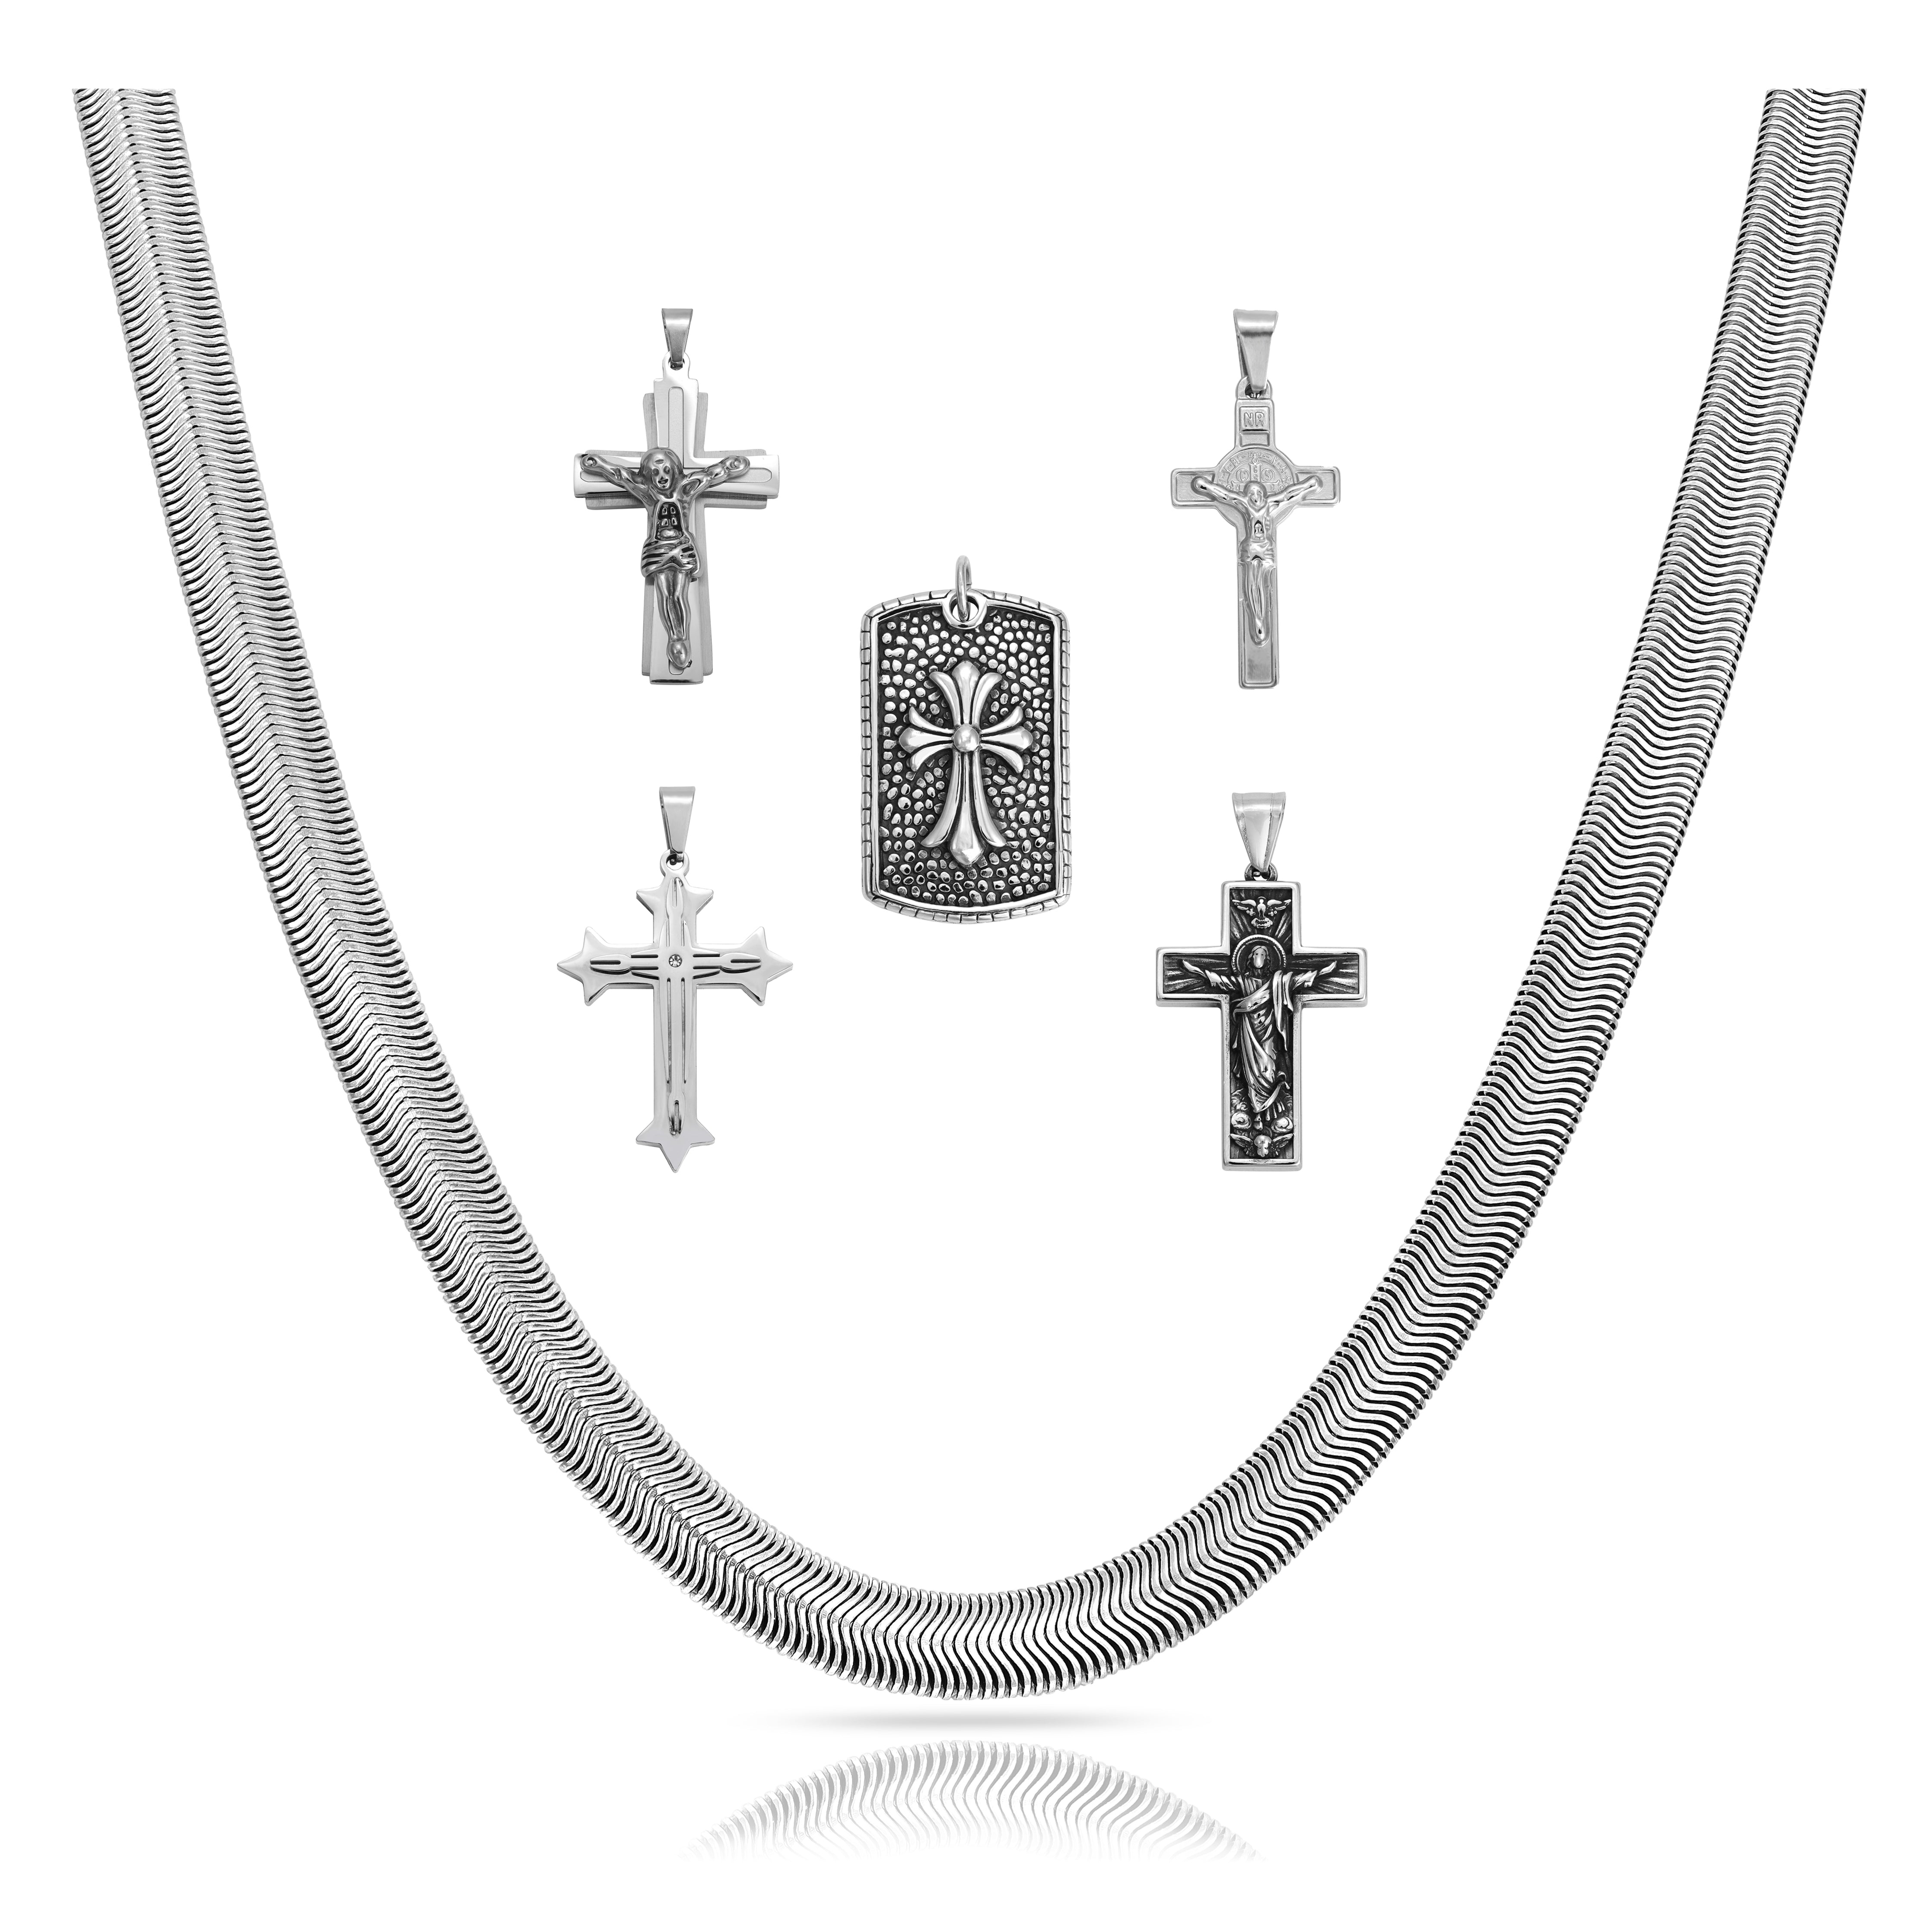 Set 10 - Edelstahl Herringbone Chain 6,3mm breit + Edelstahl Kreuz Anhänger - Taipan Schmuck